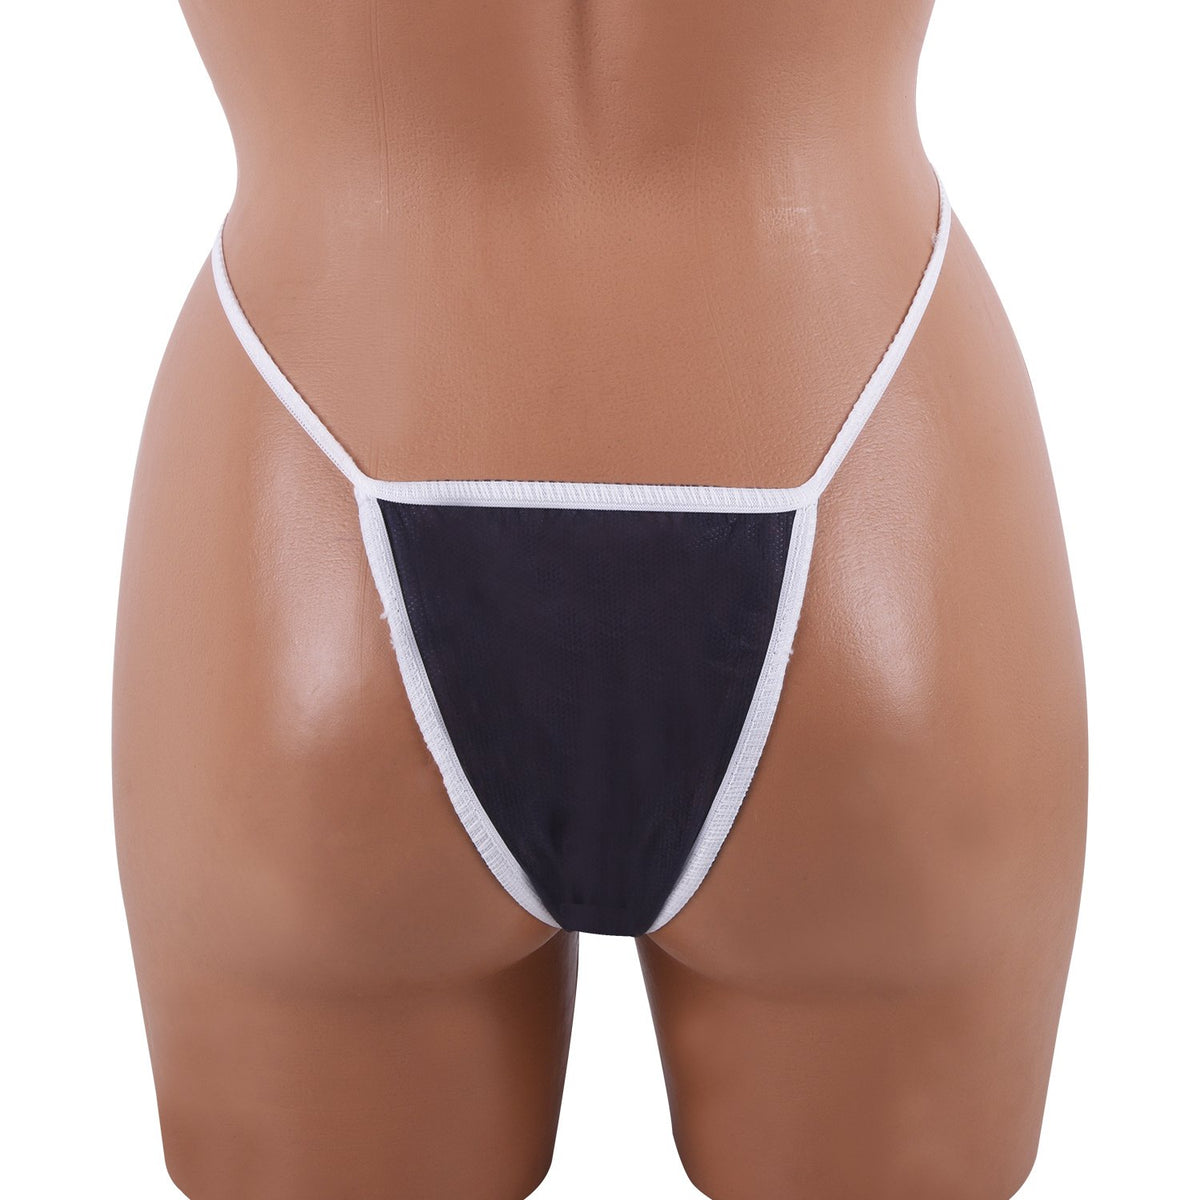 Women's disposable thong fully elastic S/M - 200 pcs